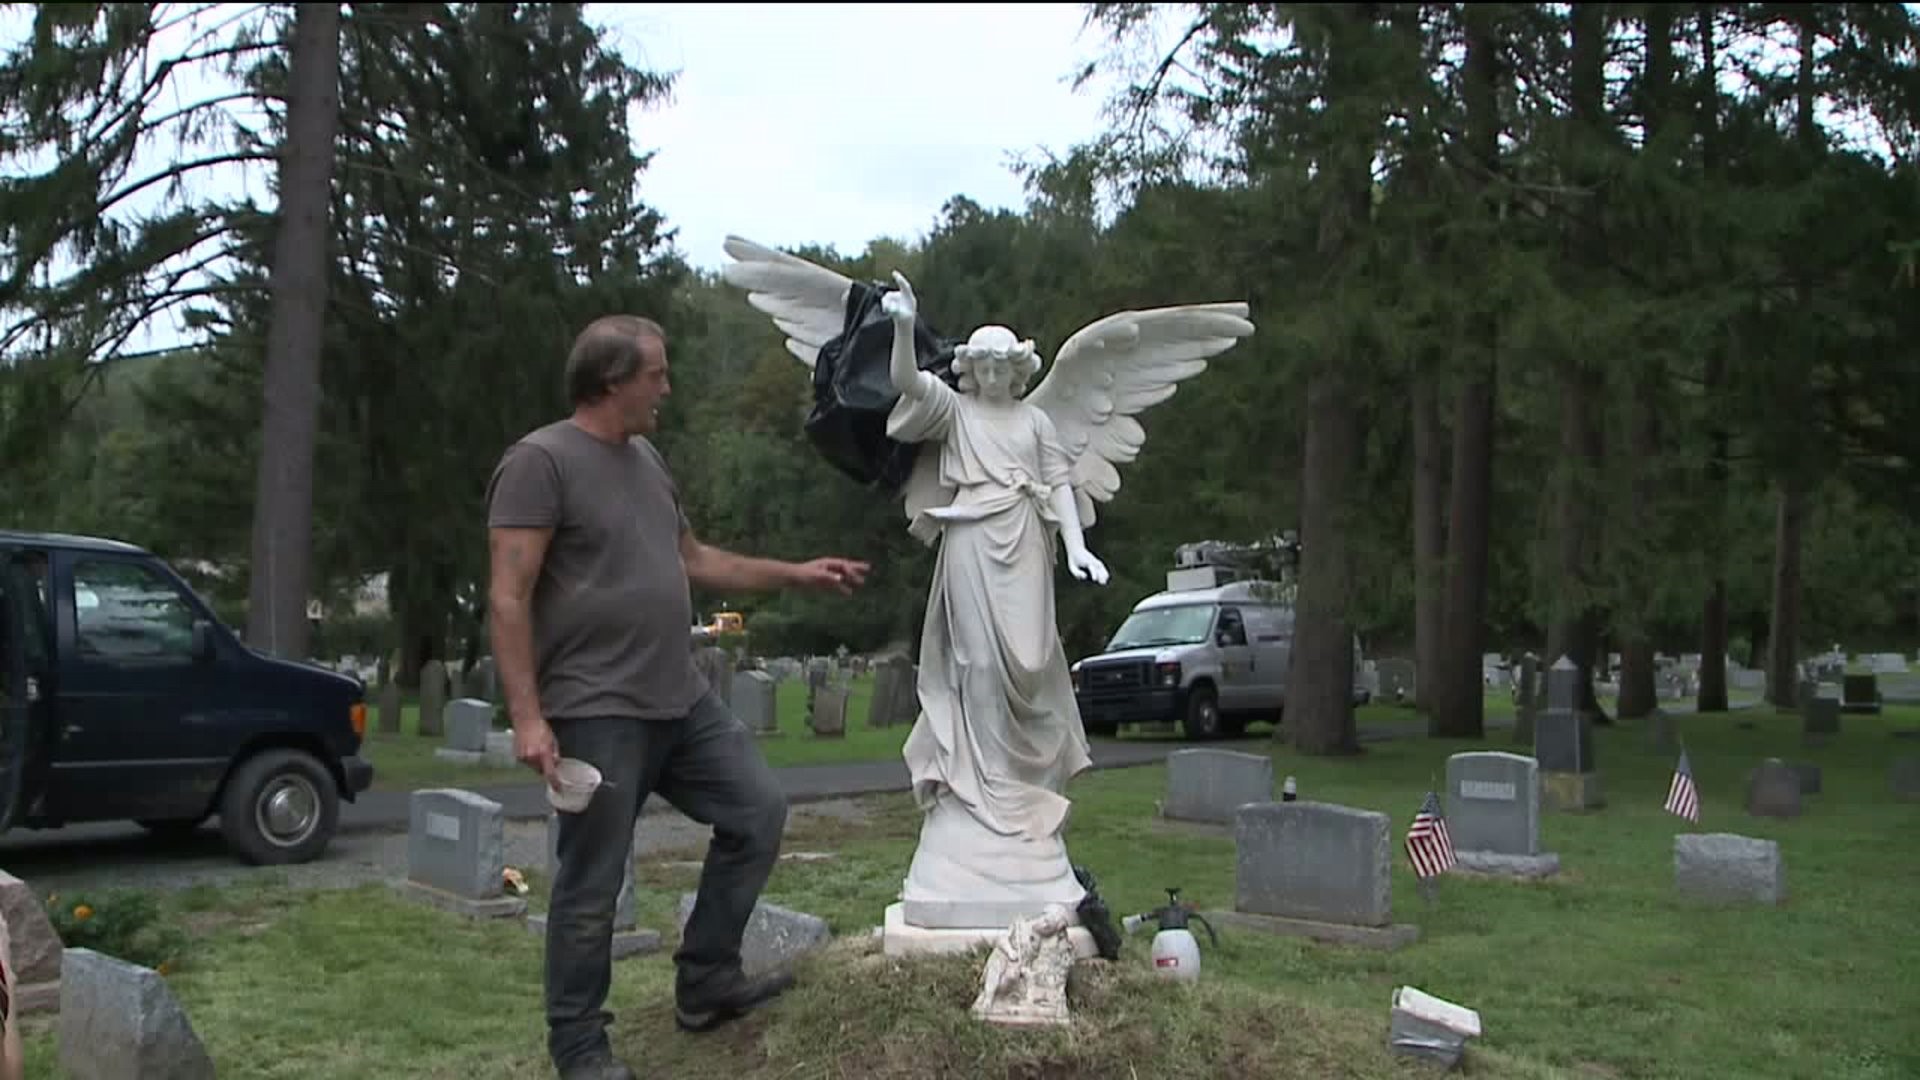 Sculptor Restoring Children's Burial Monument Damaged by Tornado